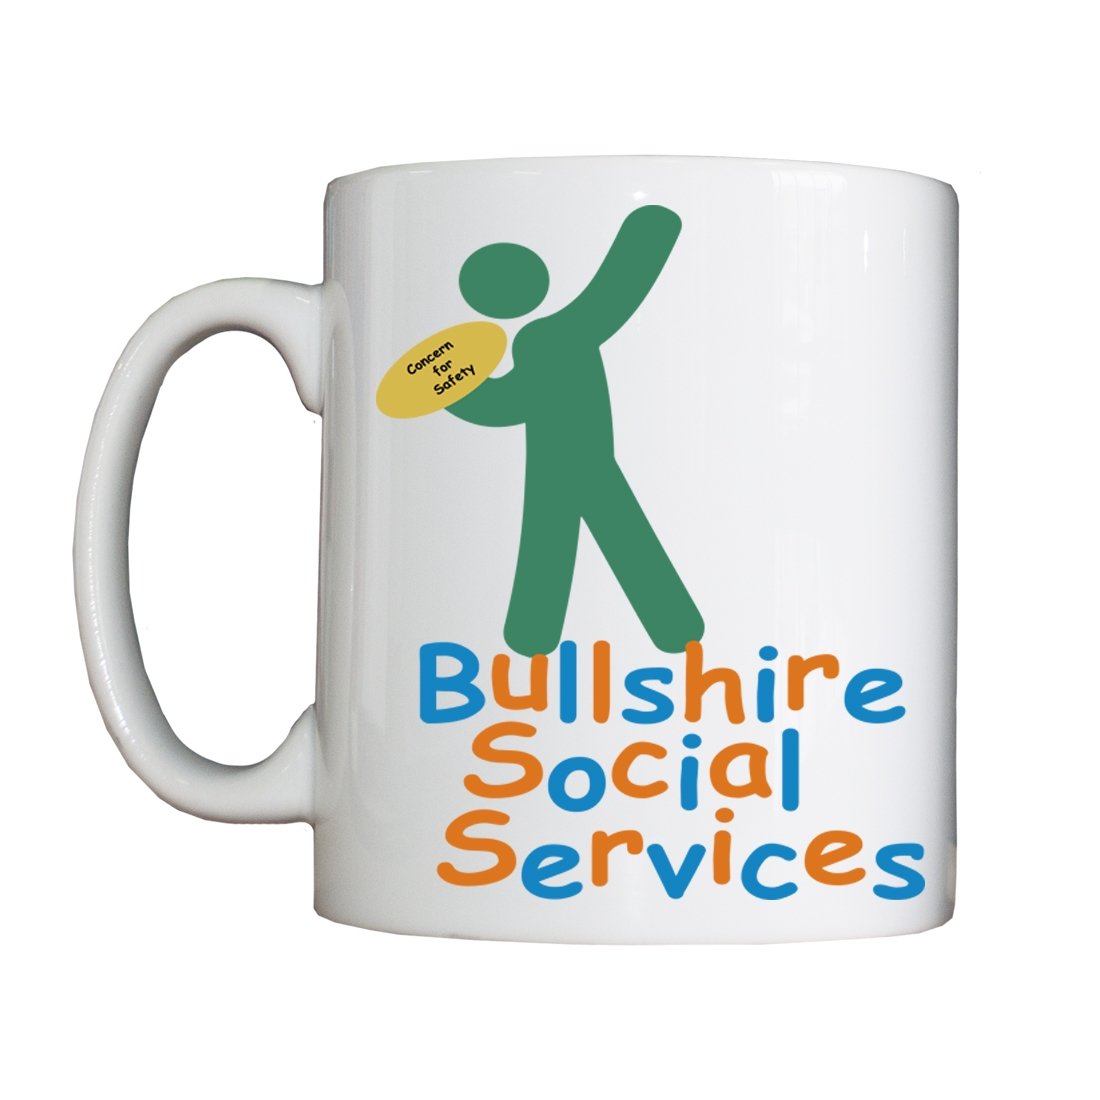 Personalised 'Bullshire Social Services' Drinking Vessel (Mug)